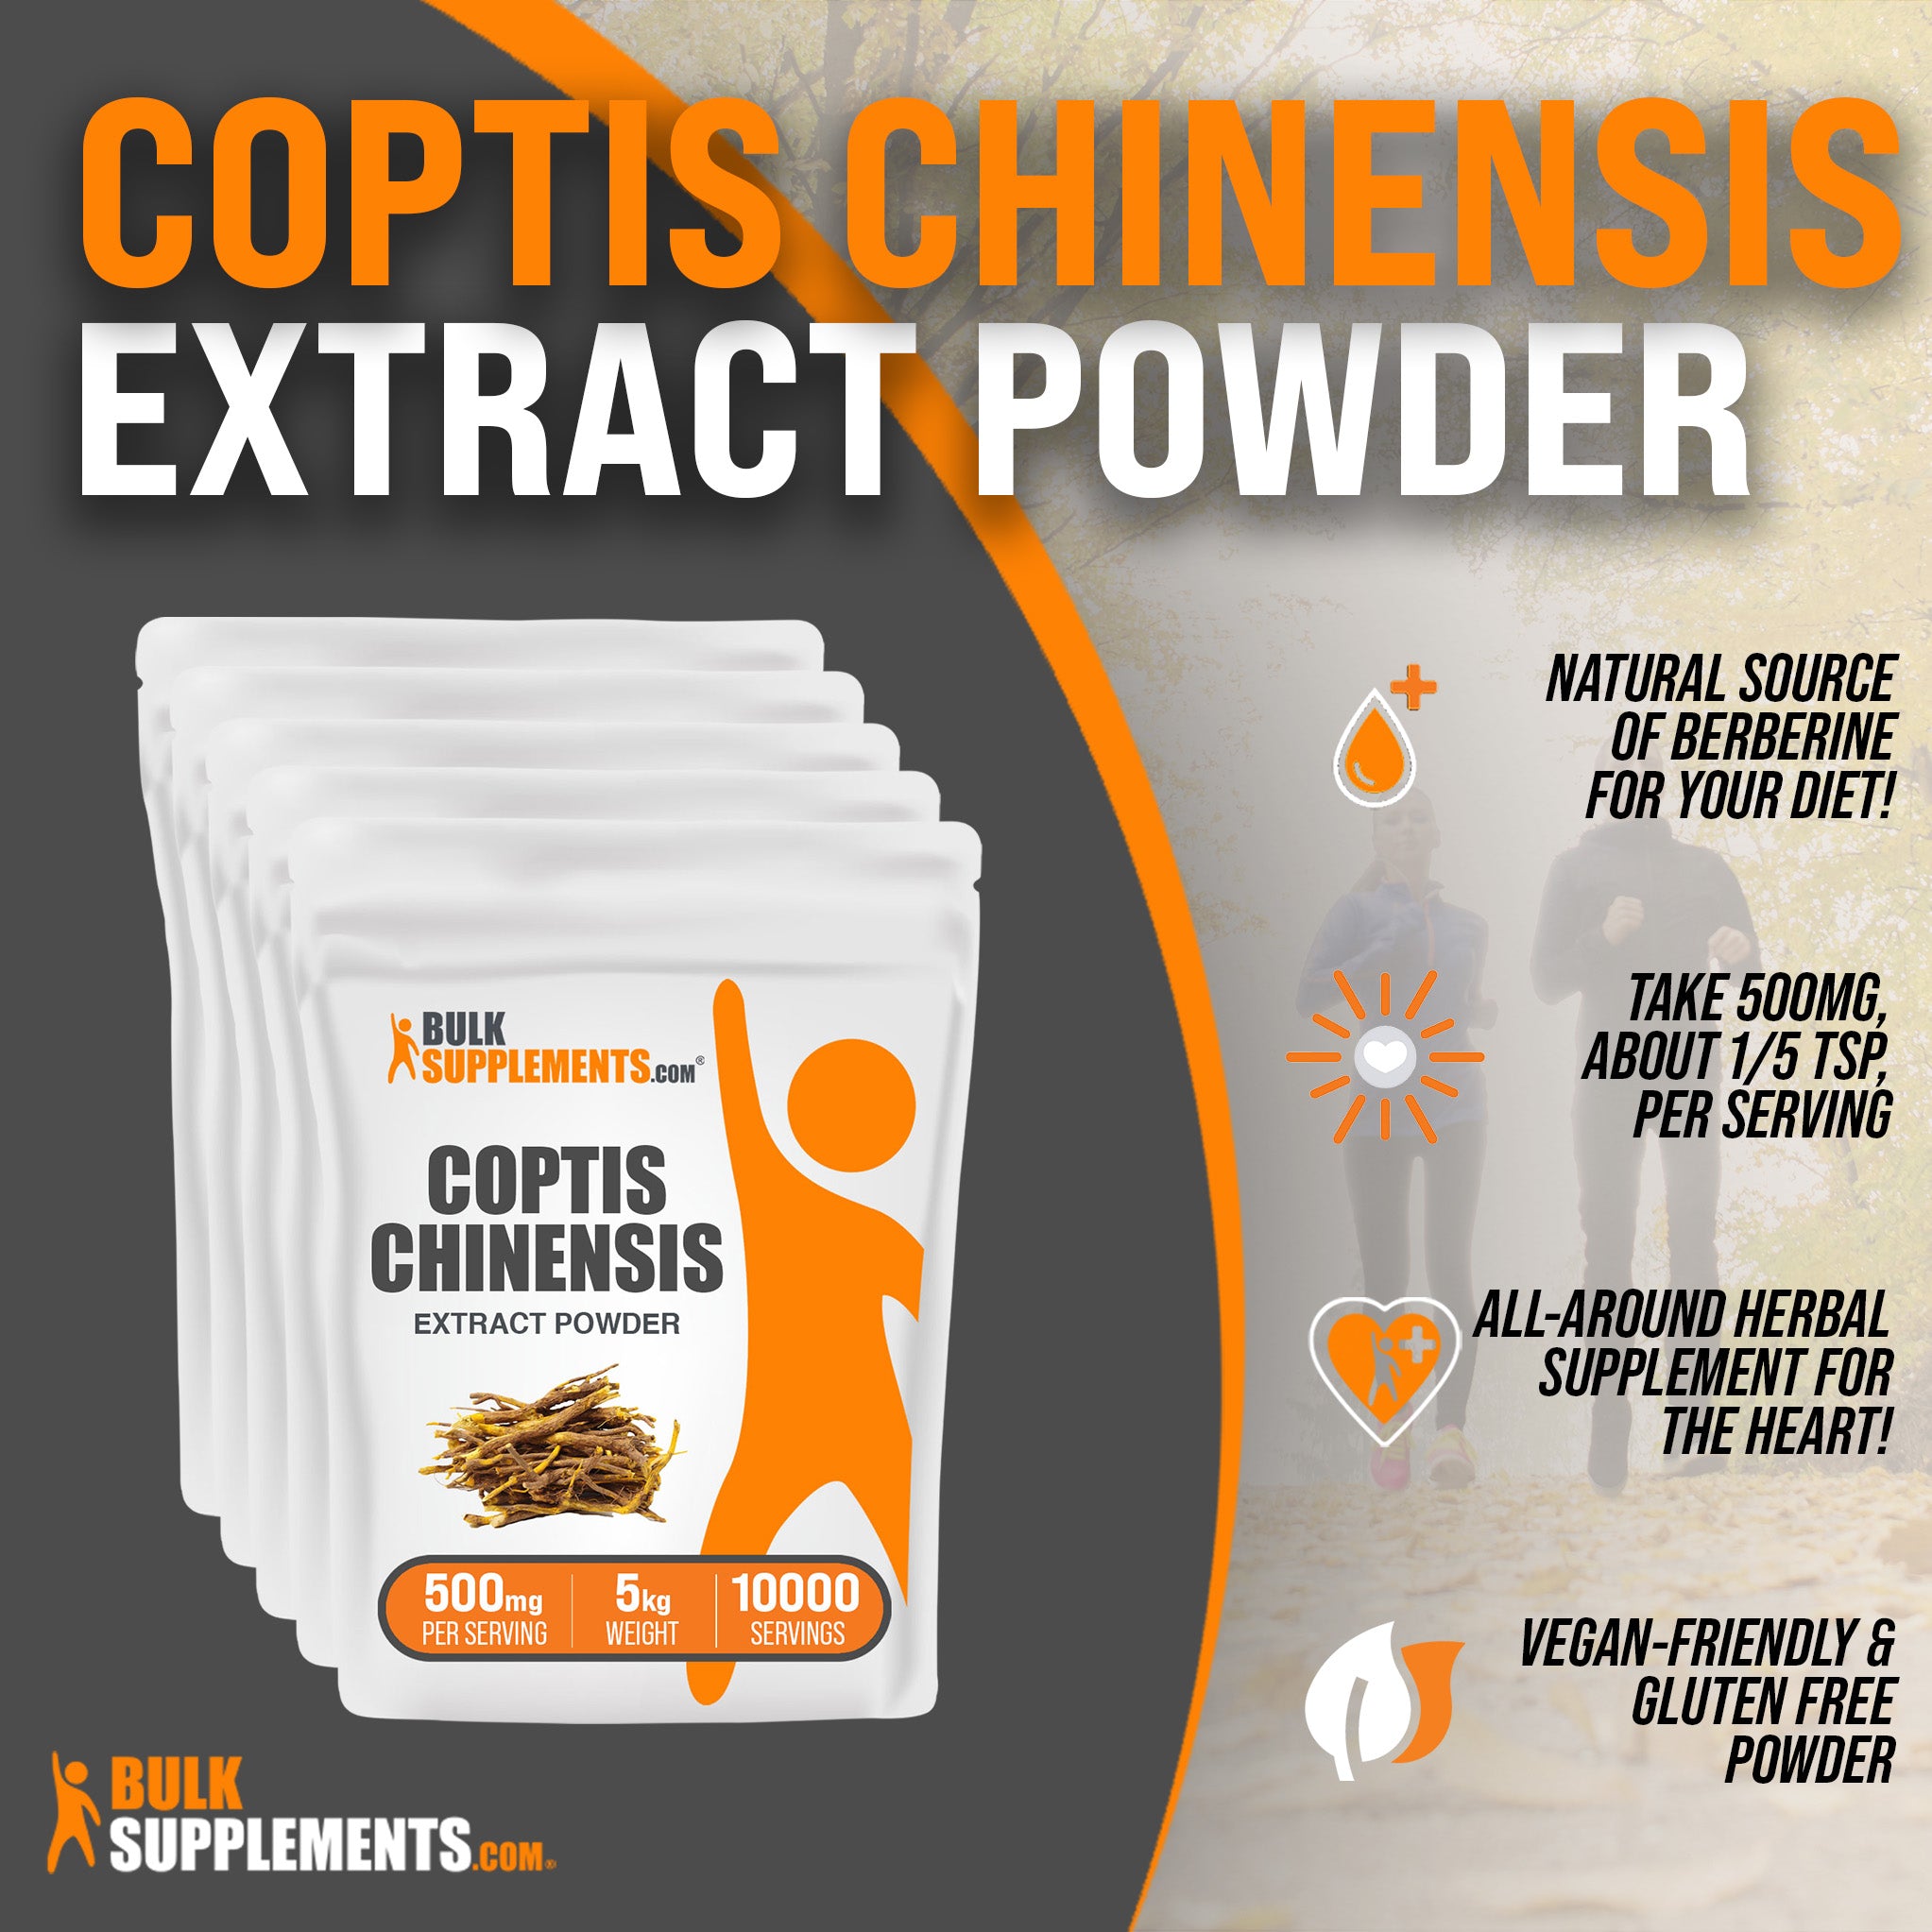 5kg of coptis chinensis natural berberine supplements